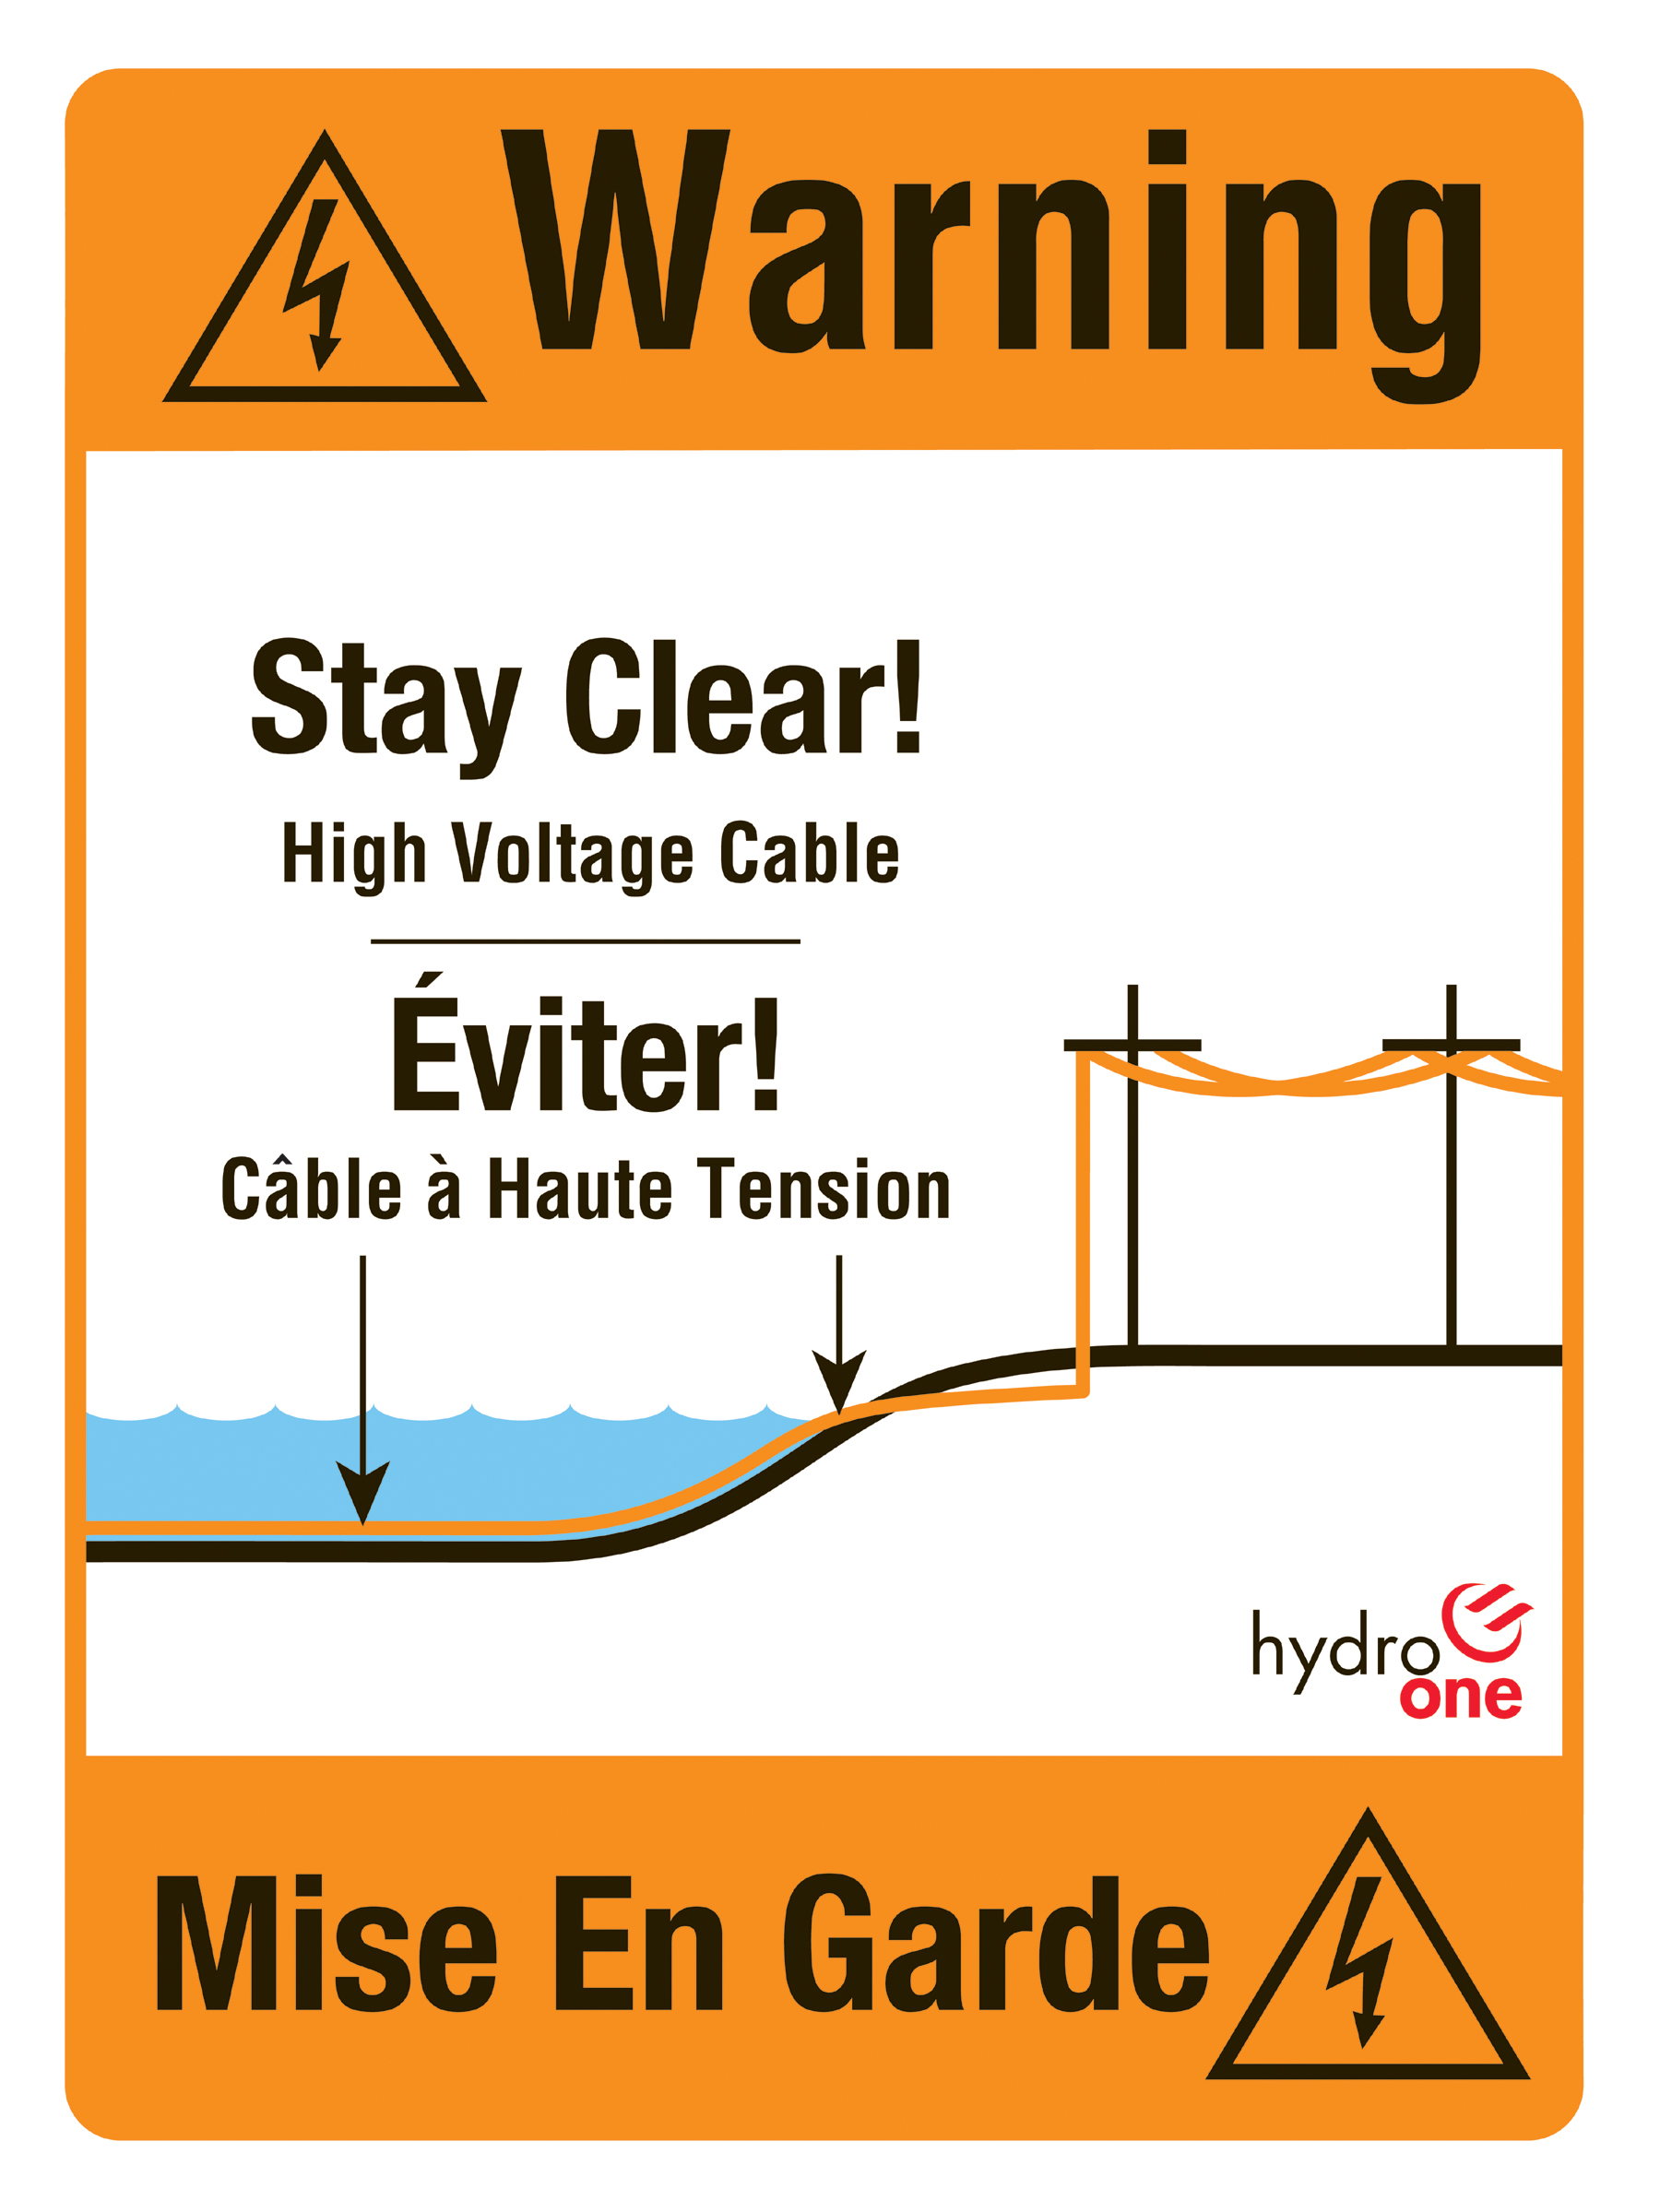 Image of Warning sign